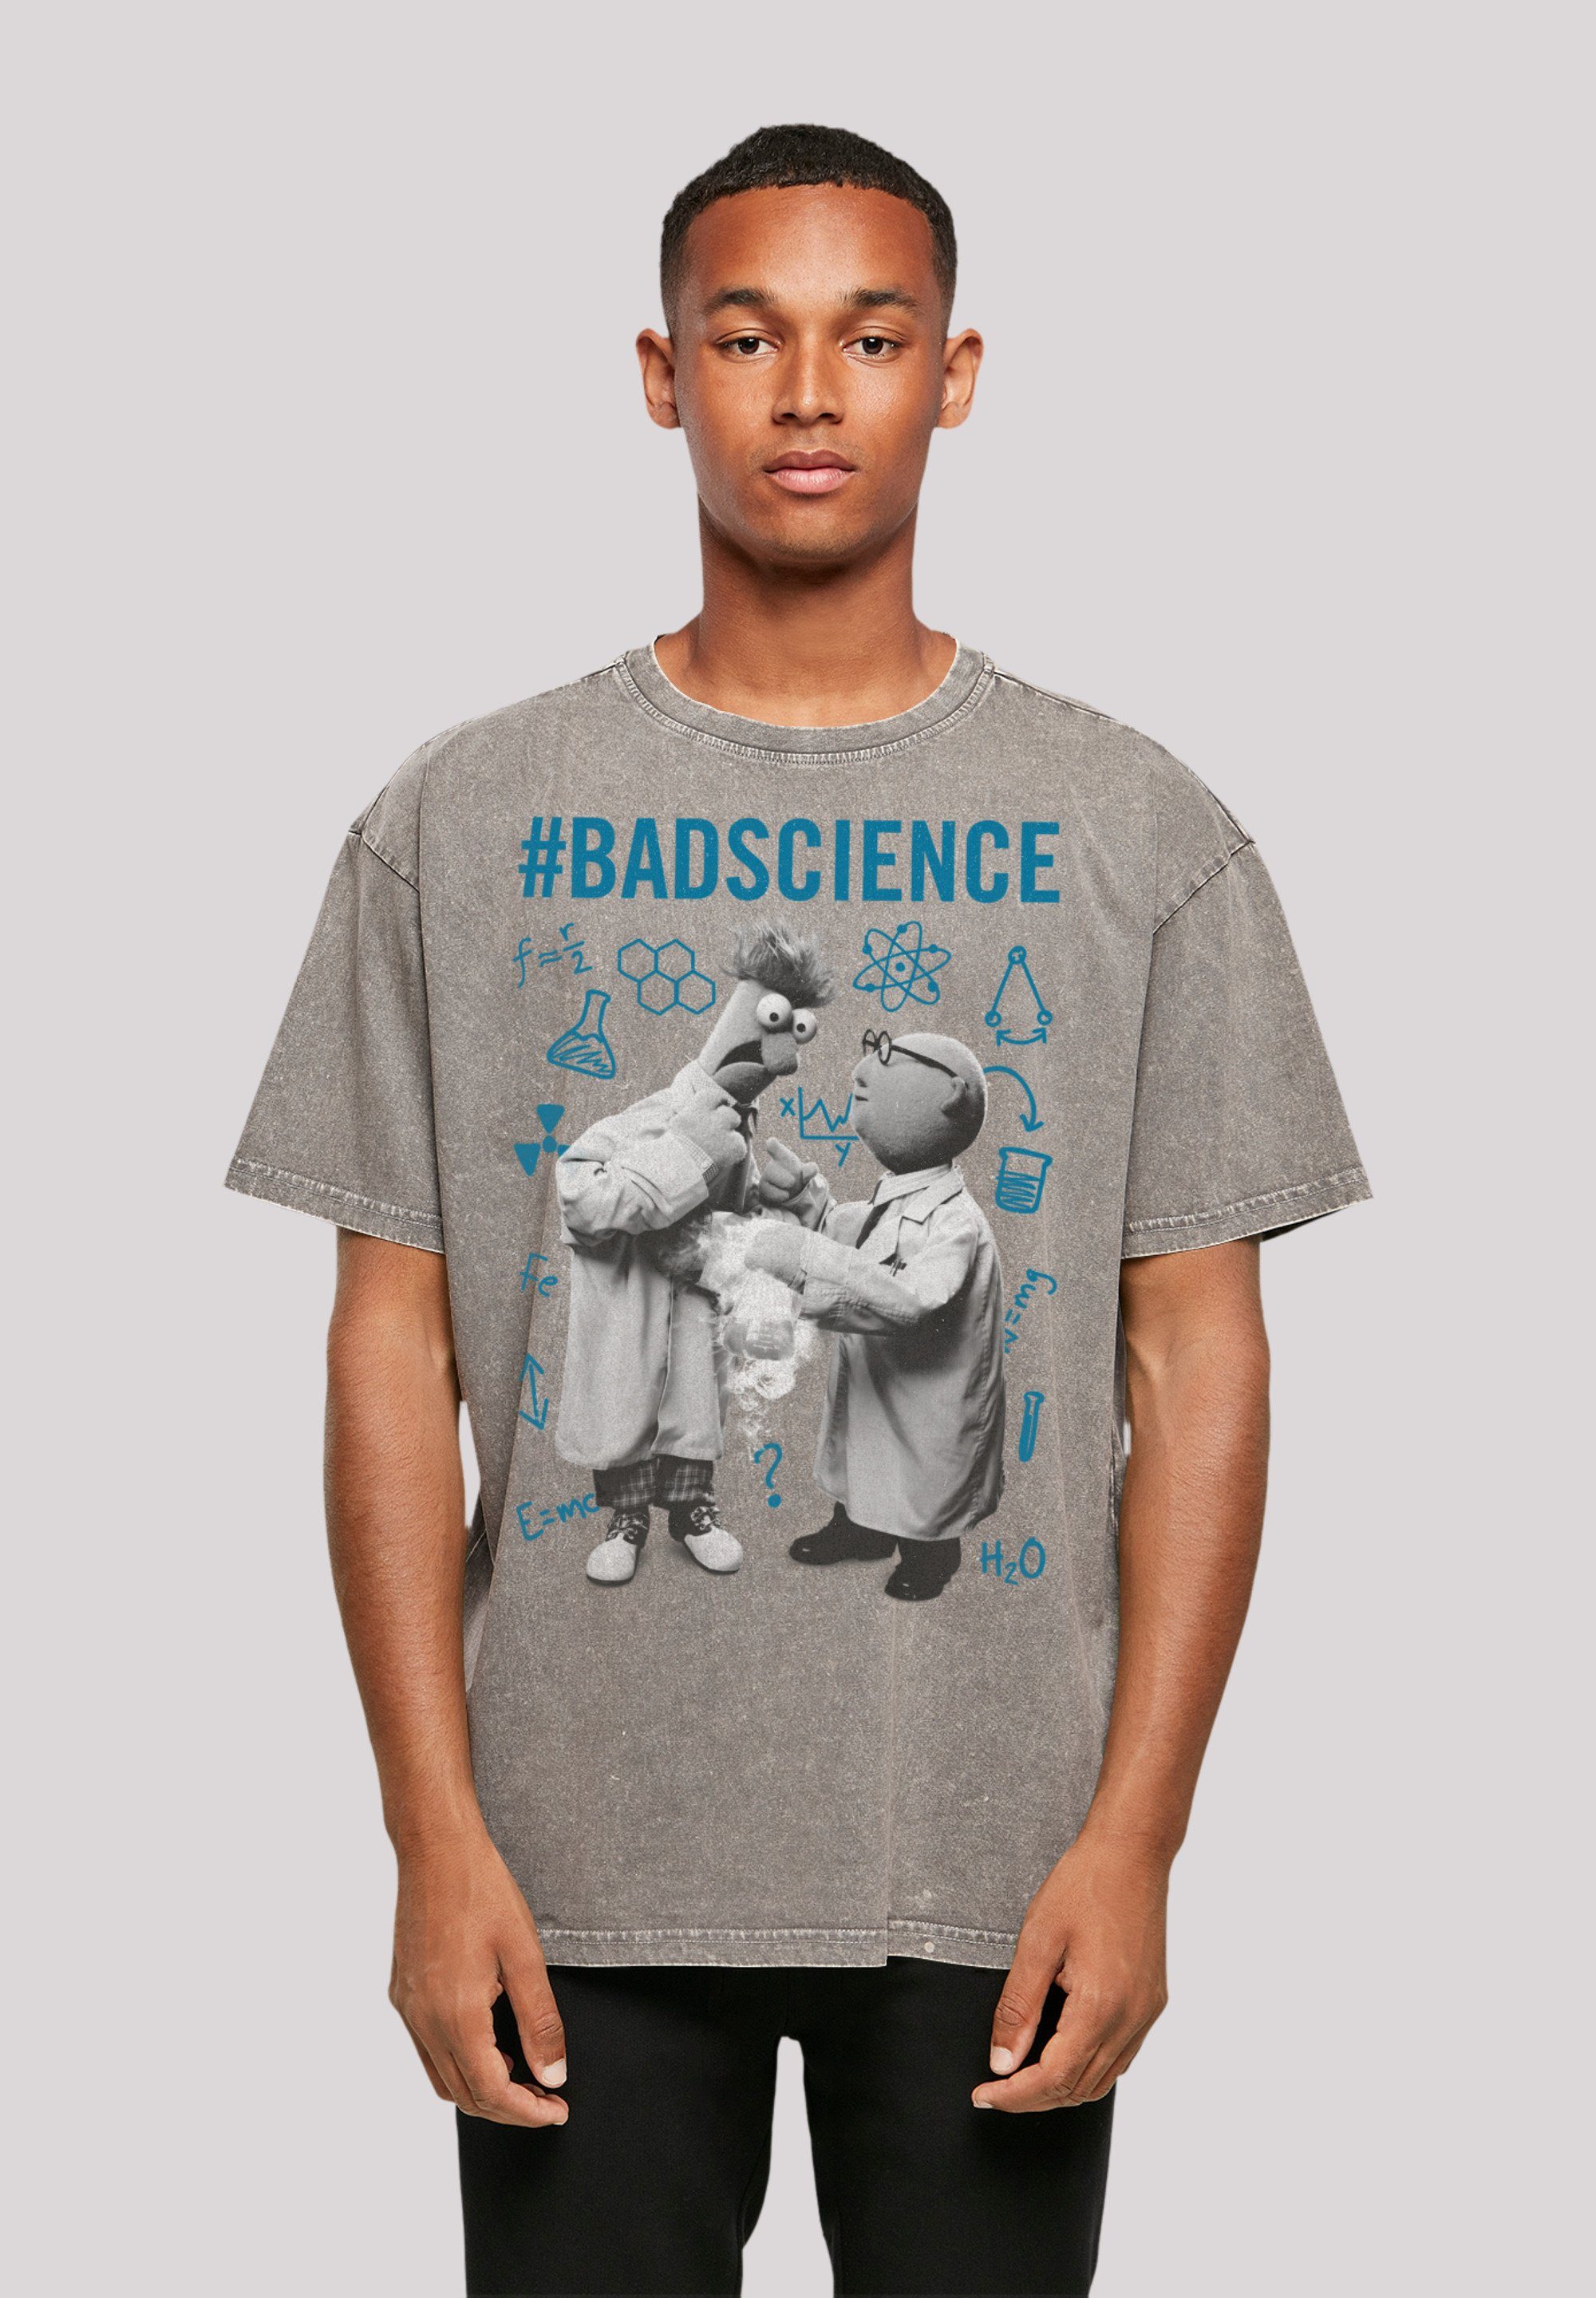 F4NT4STIC T-Shirt Disney Muppets #BadScience Premium Qualität, Offiziell  lizenziertes Disney T-Shirt